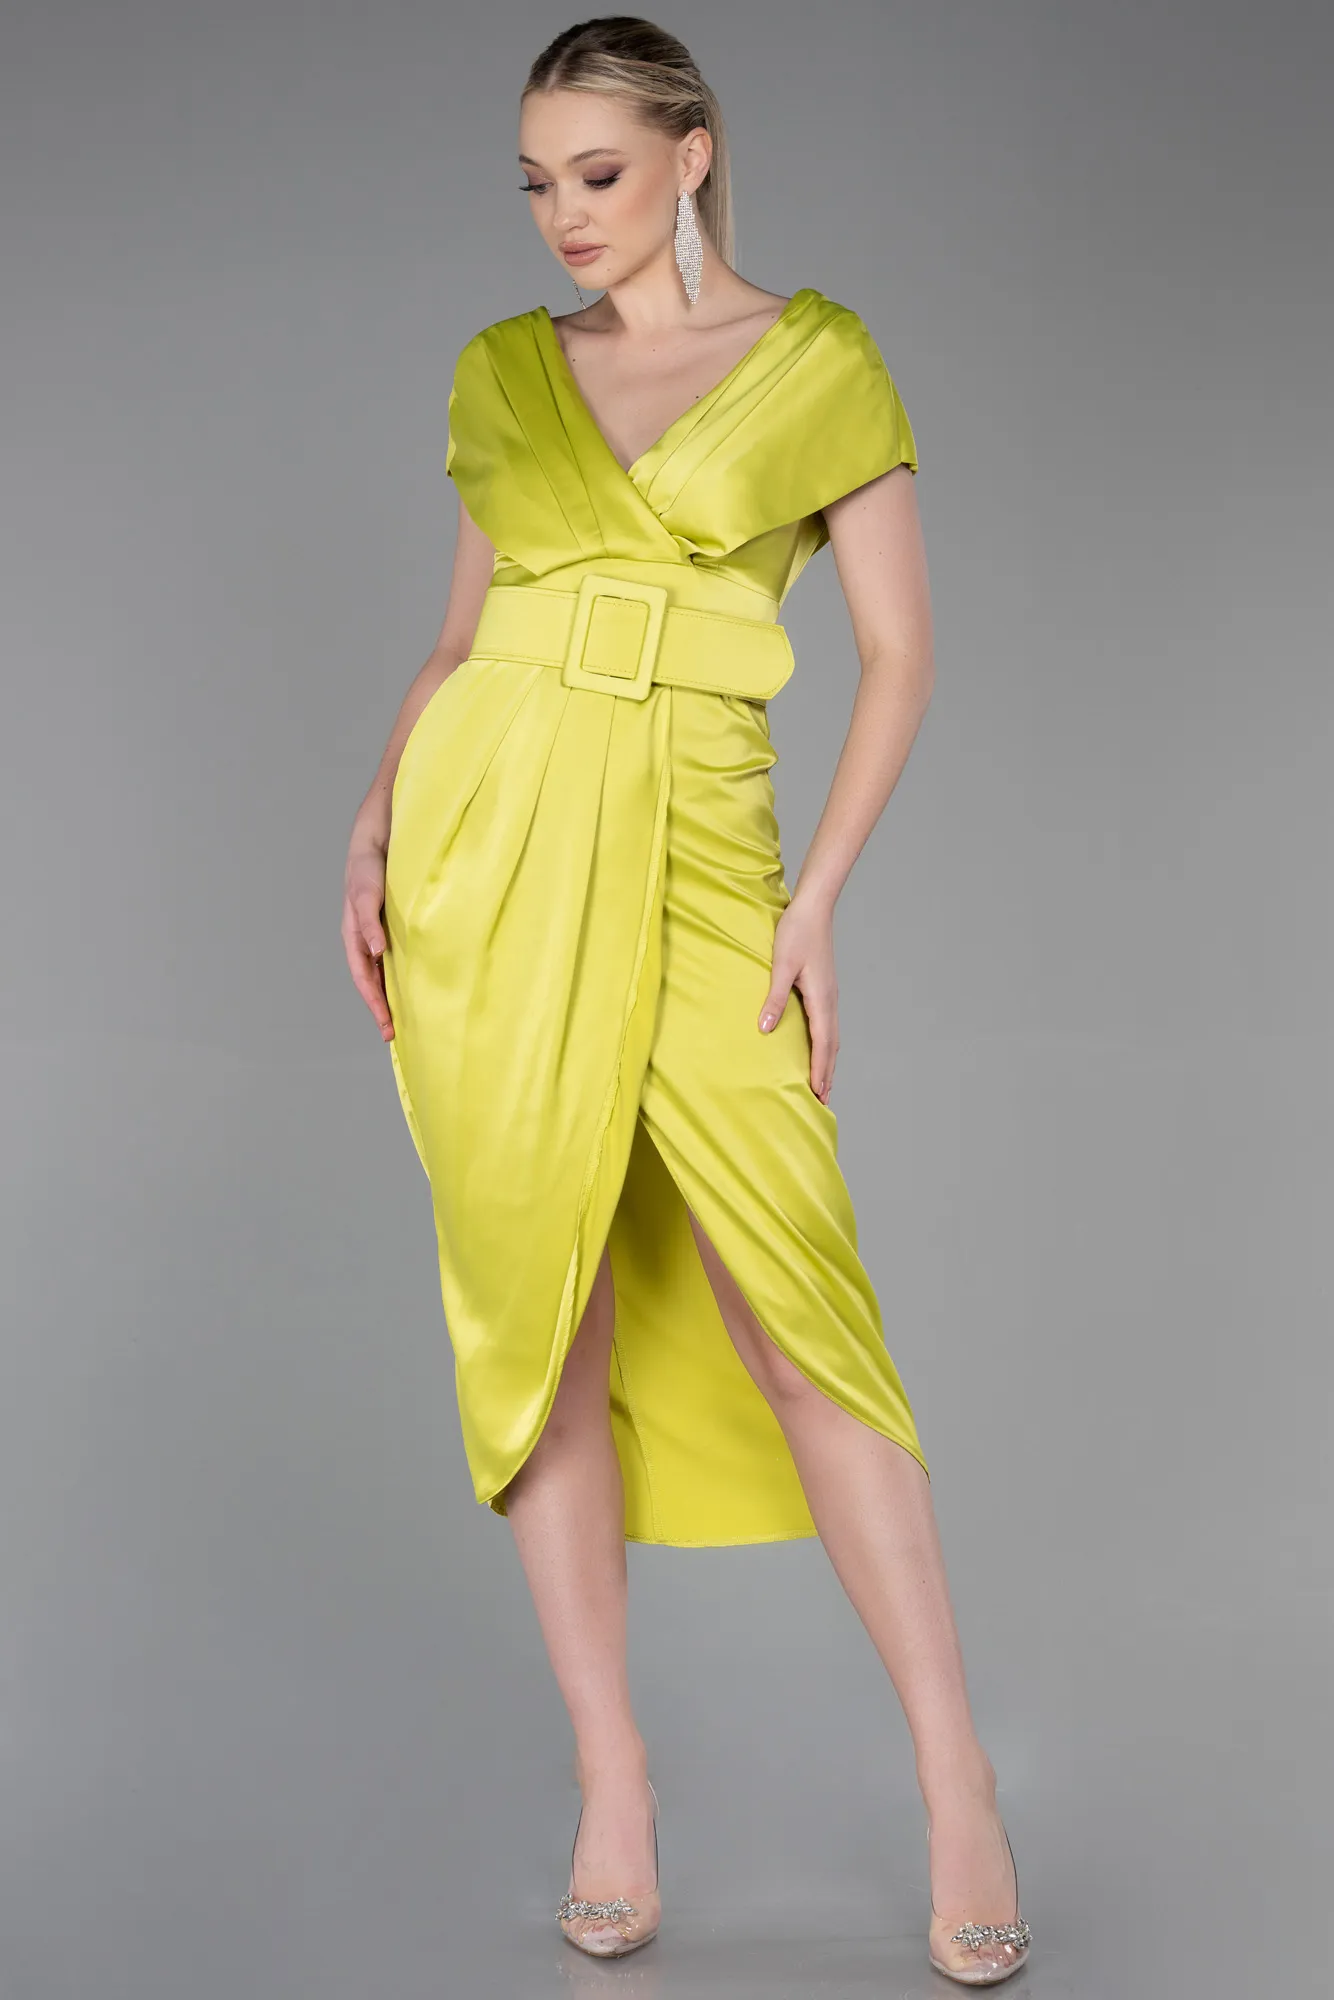 Pistachio Green-Short Satin Invitation Dress ABK1107